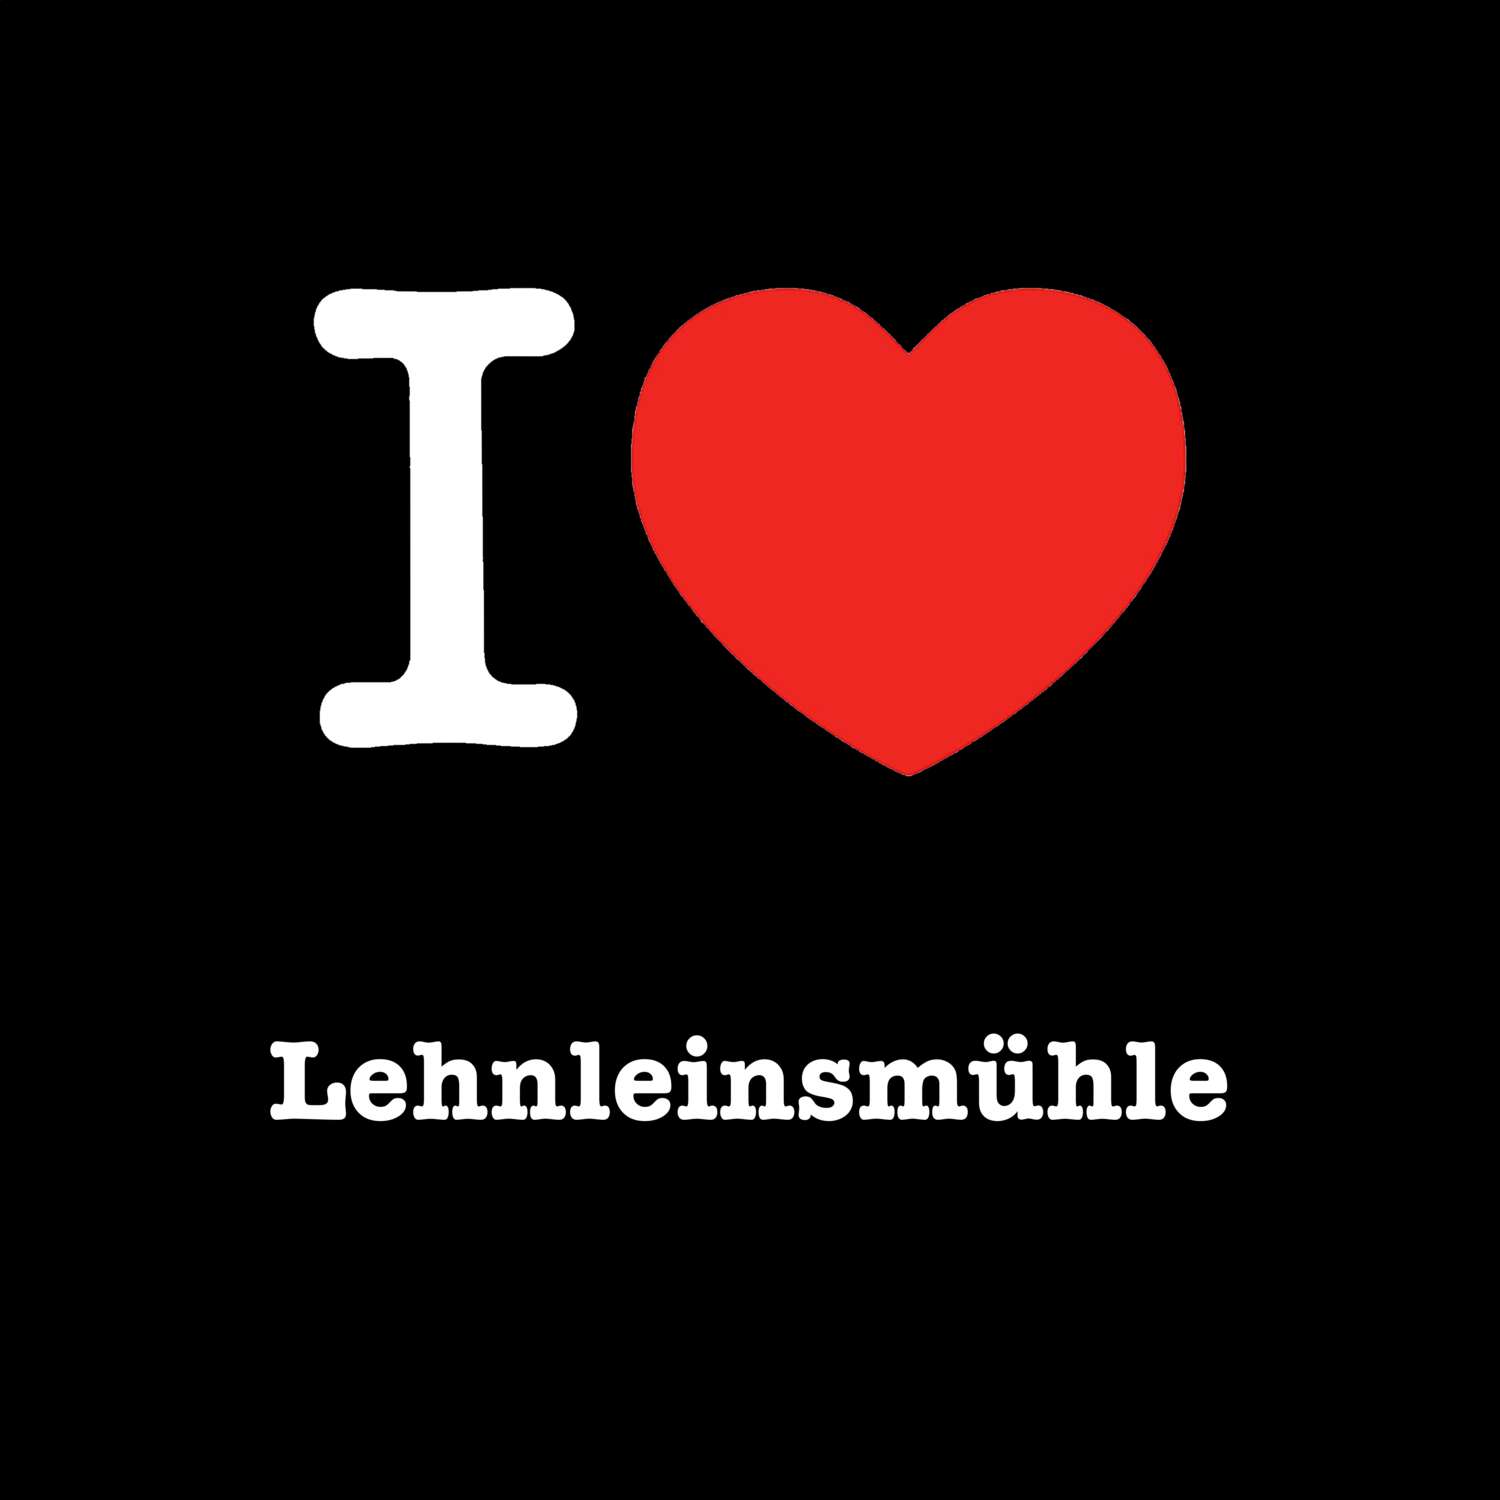 Lehnleinsmühle T-Shirt »I love«